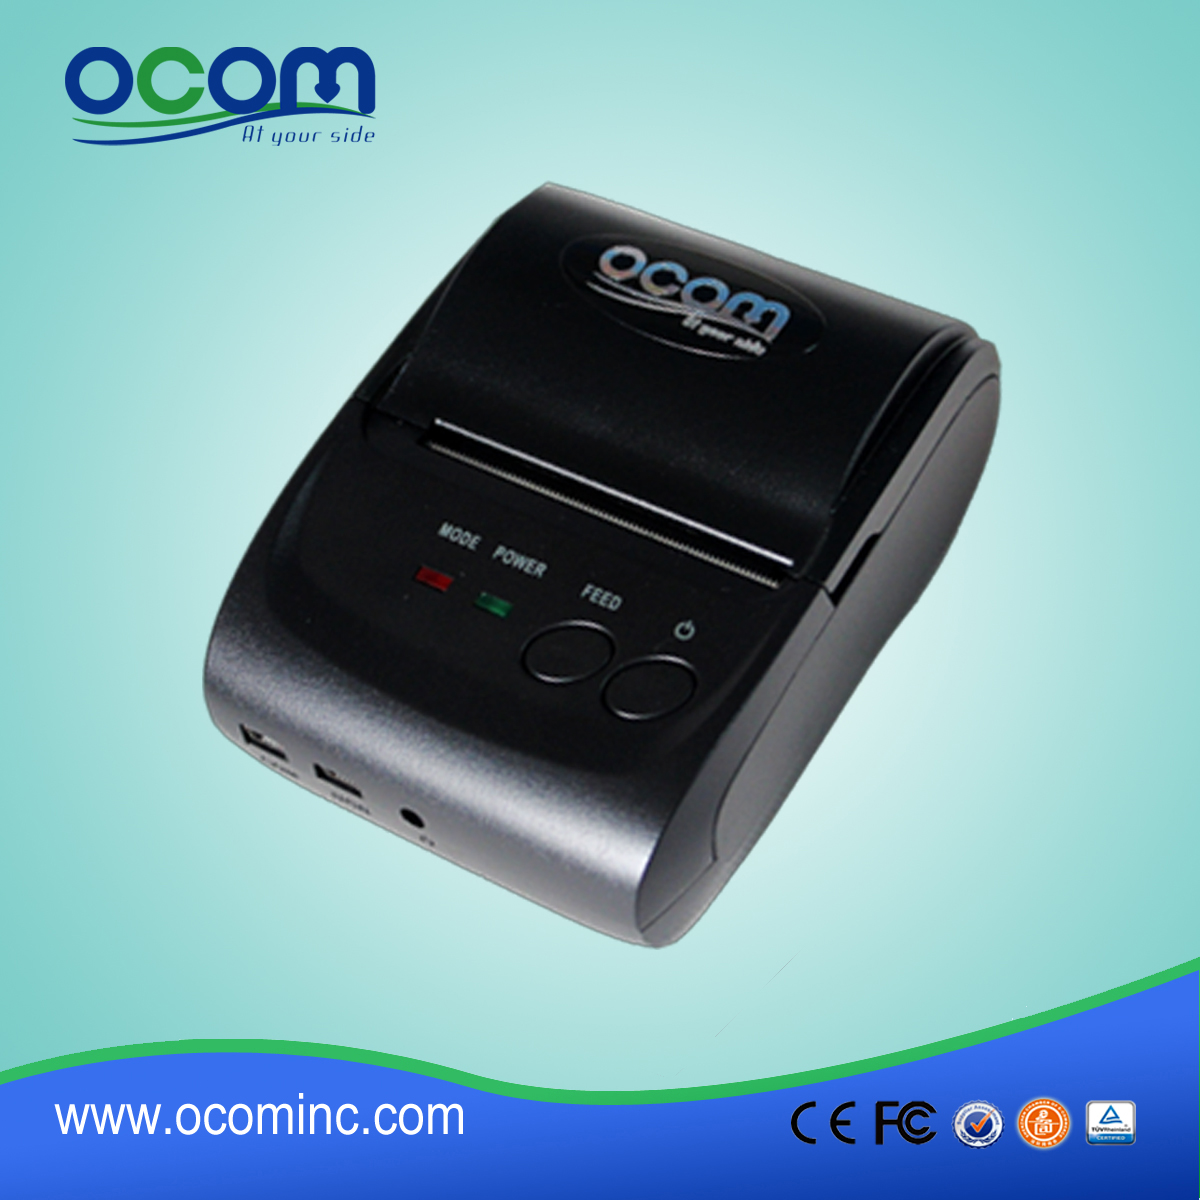 OCPP-M05: hochwertige mobilen Bluetooth-Drucker 58mm, Mini-USB-Thermodrucker